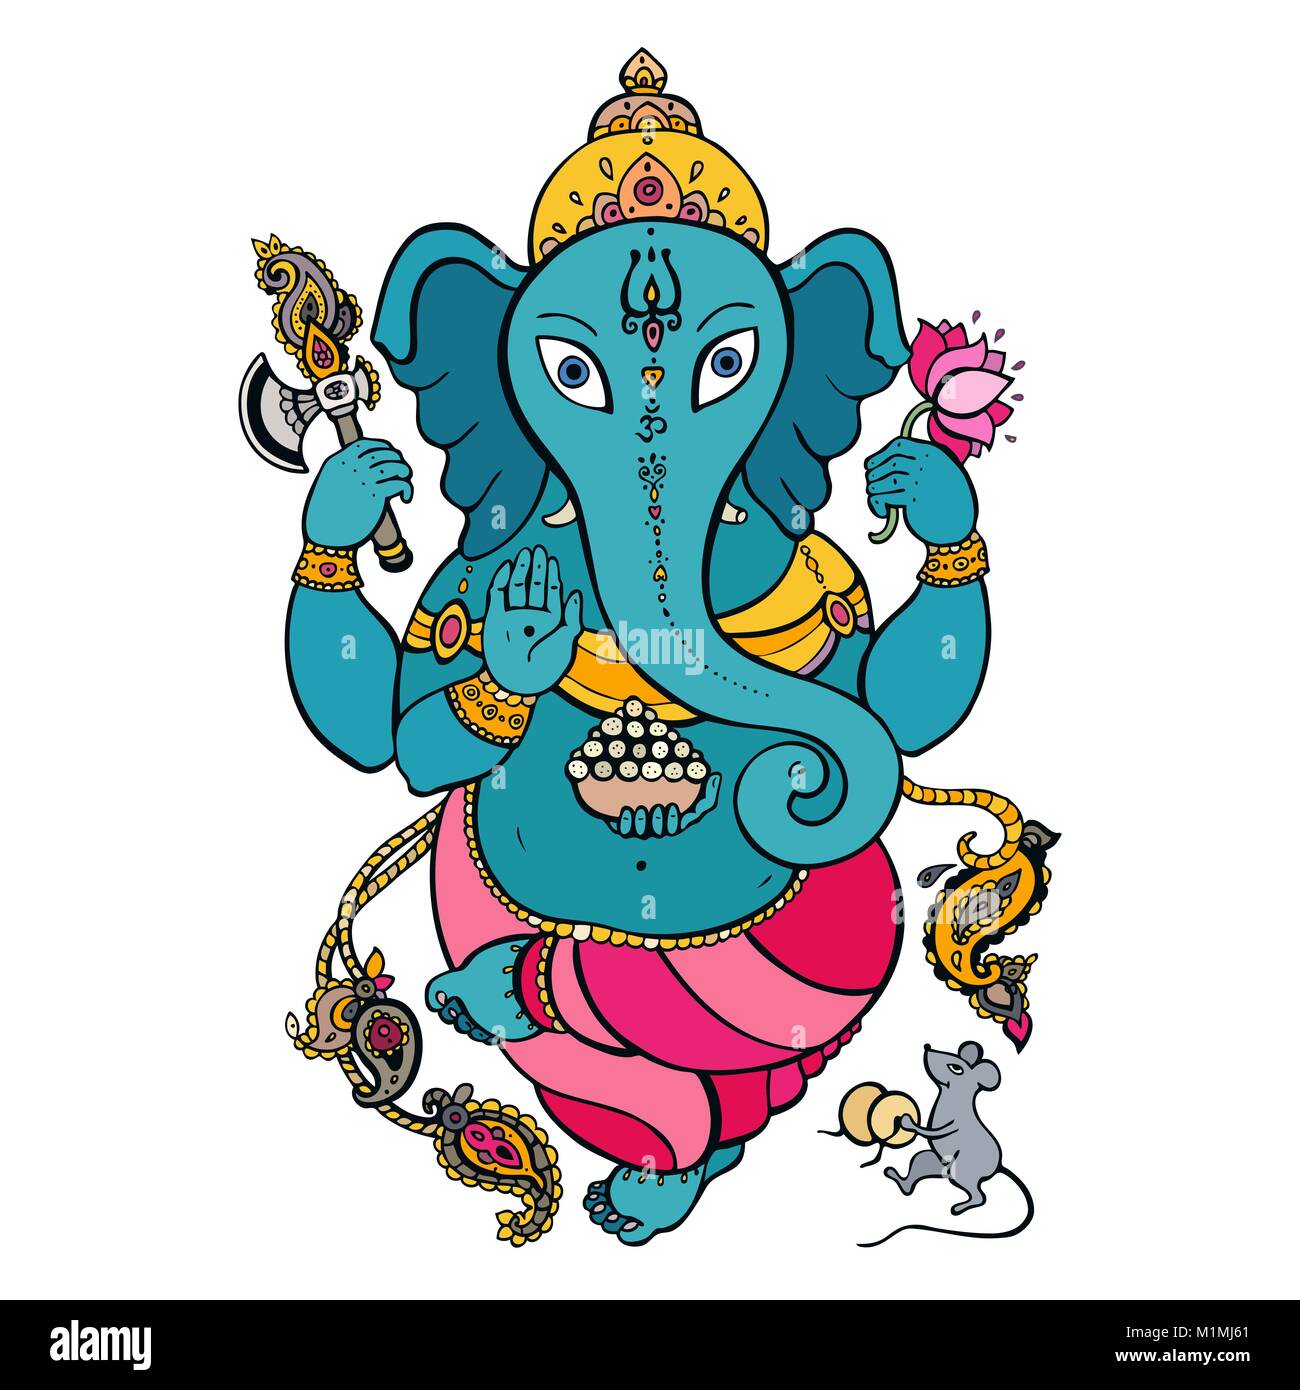 How to Draw Ganesha Easy | Ganesha Chaturthi | Yaazhini Fine Art - YouTube-saigonsouth.com.vn